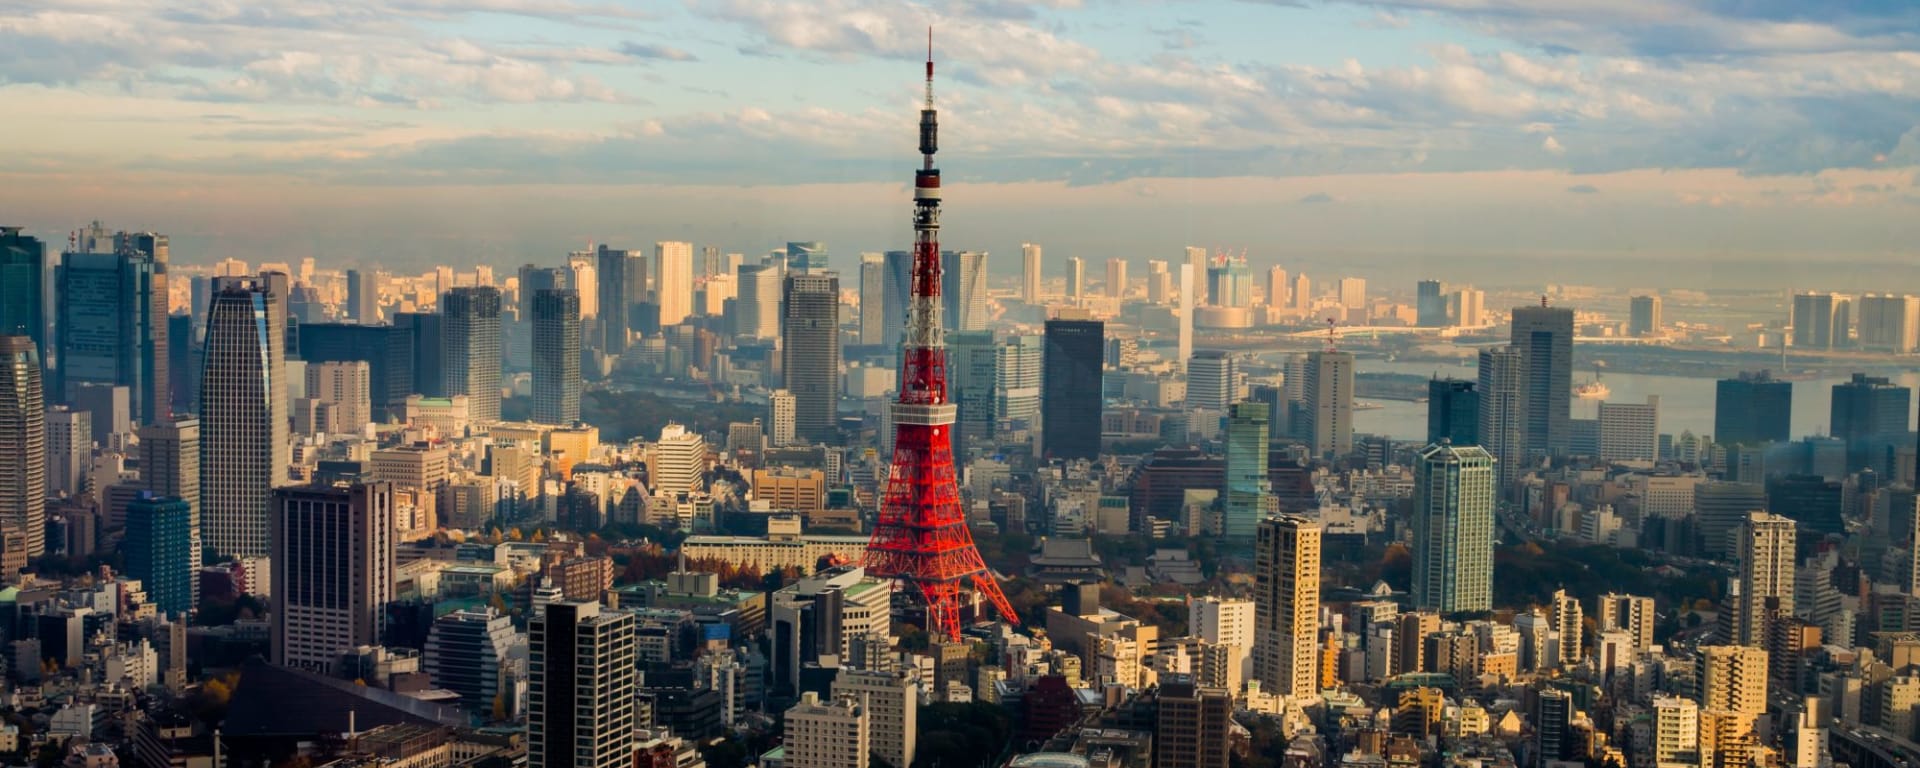 Leserreise Einzigartiges Japan ab Tokio: Tokyo: City view with Tower